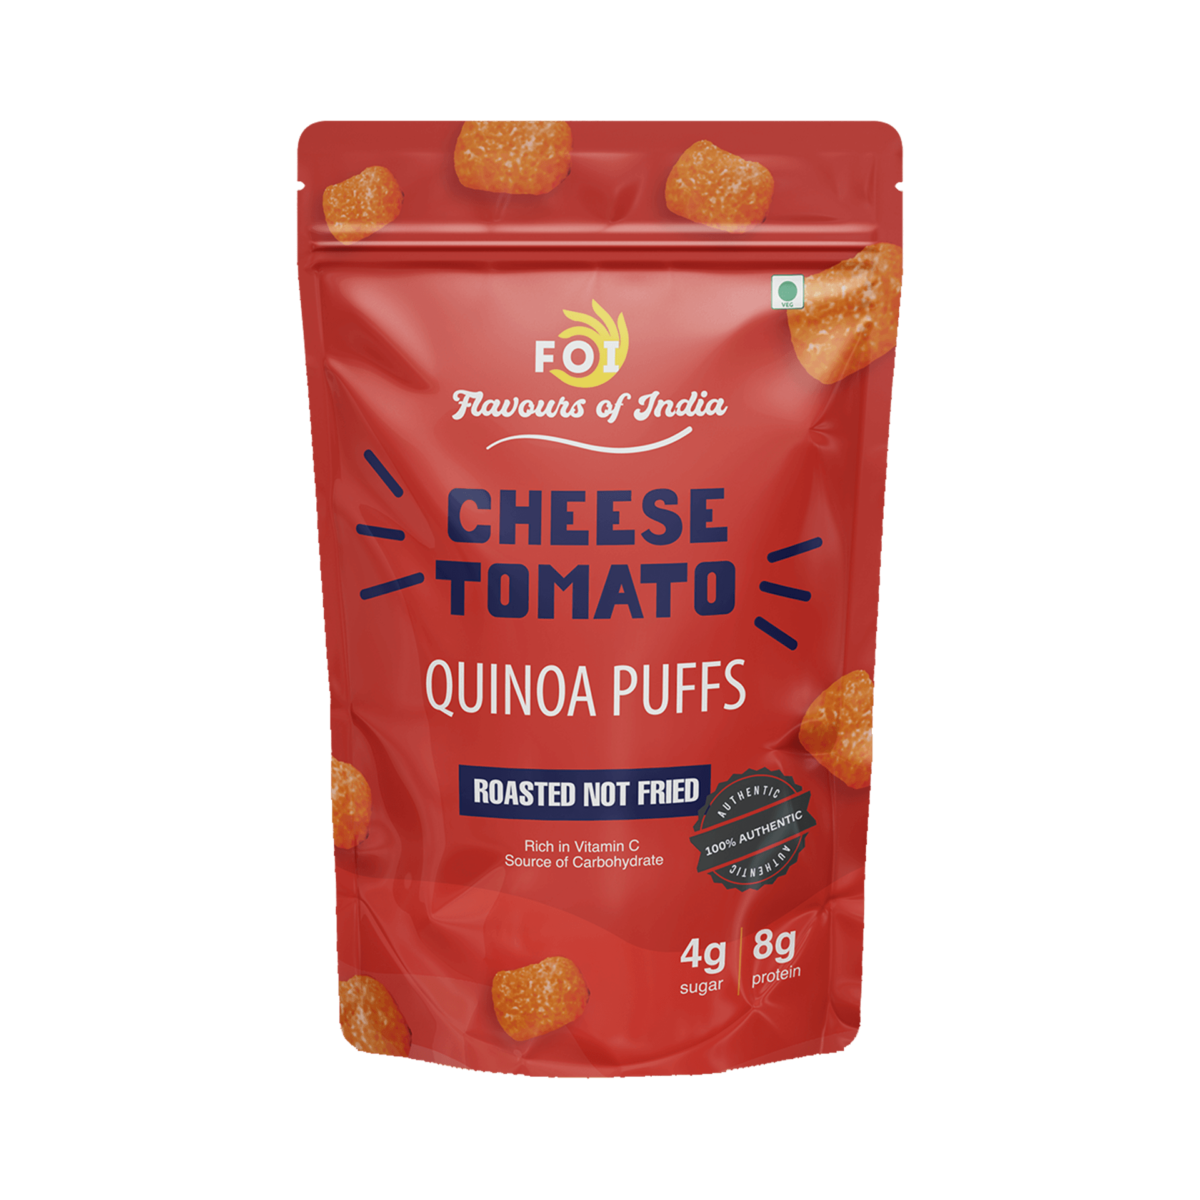 Quinoa Puffs- Cheese Tomato - FOI Flavours Of India